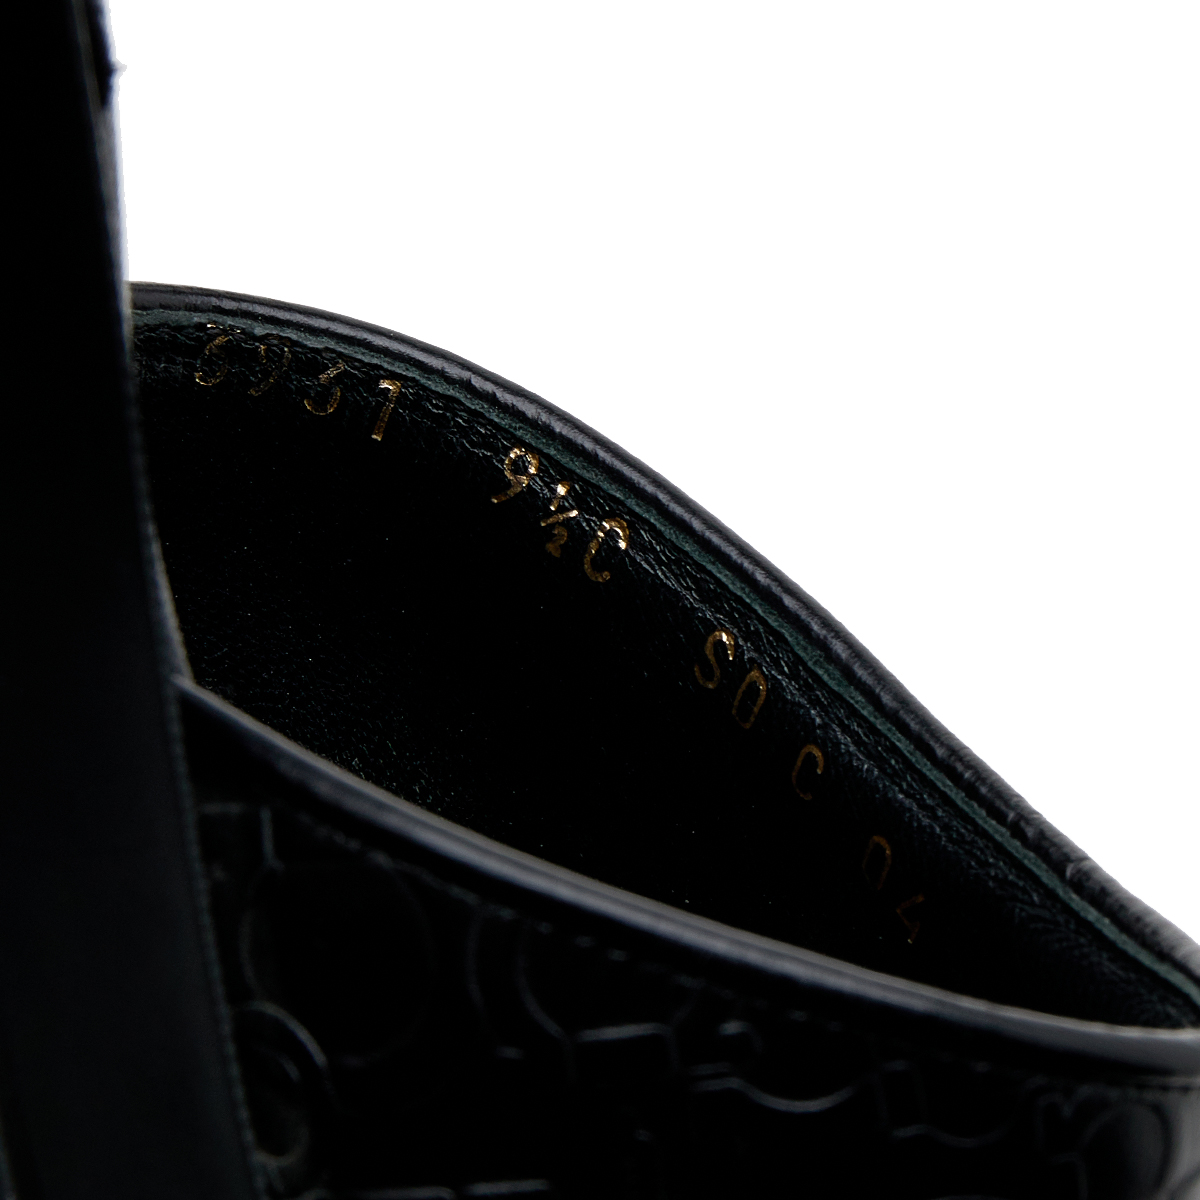 Salvatore Ferragamo Black Gancini Embossed Leather Slide Sandals Size 40